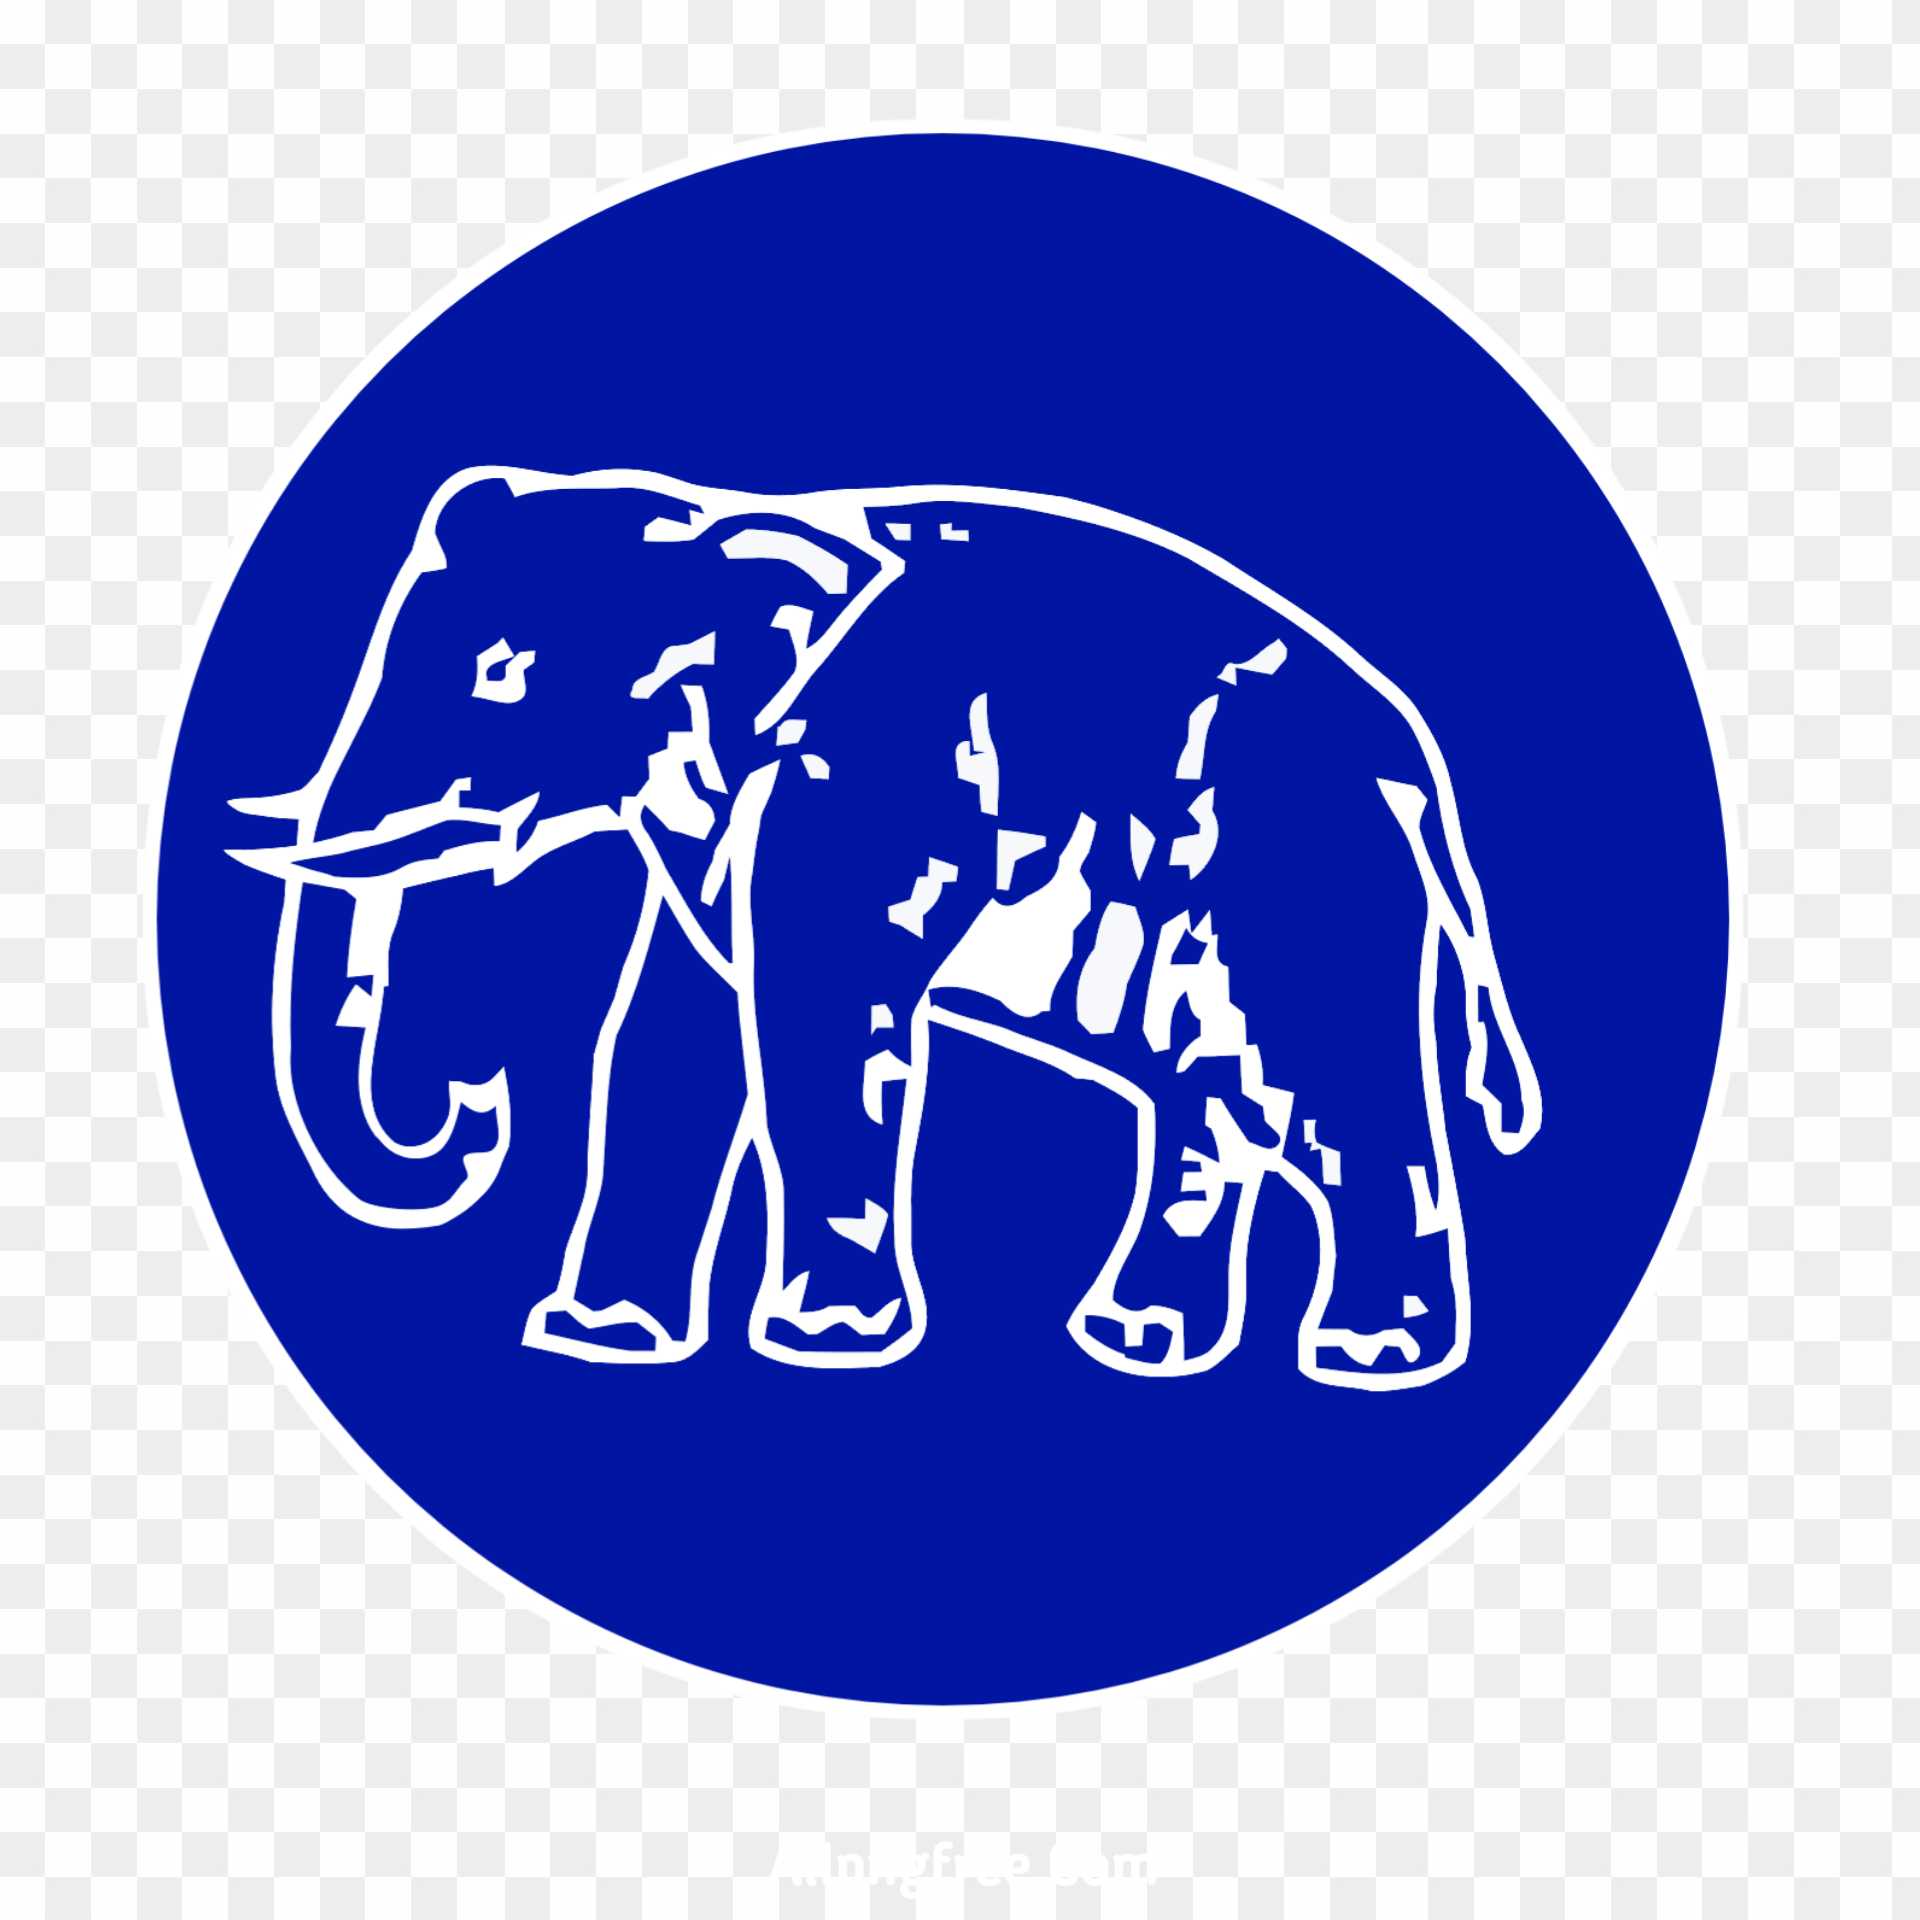 Elephant Logo [For Sale] by Jord Riekwel on Dribbble